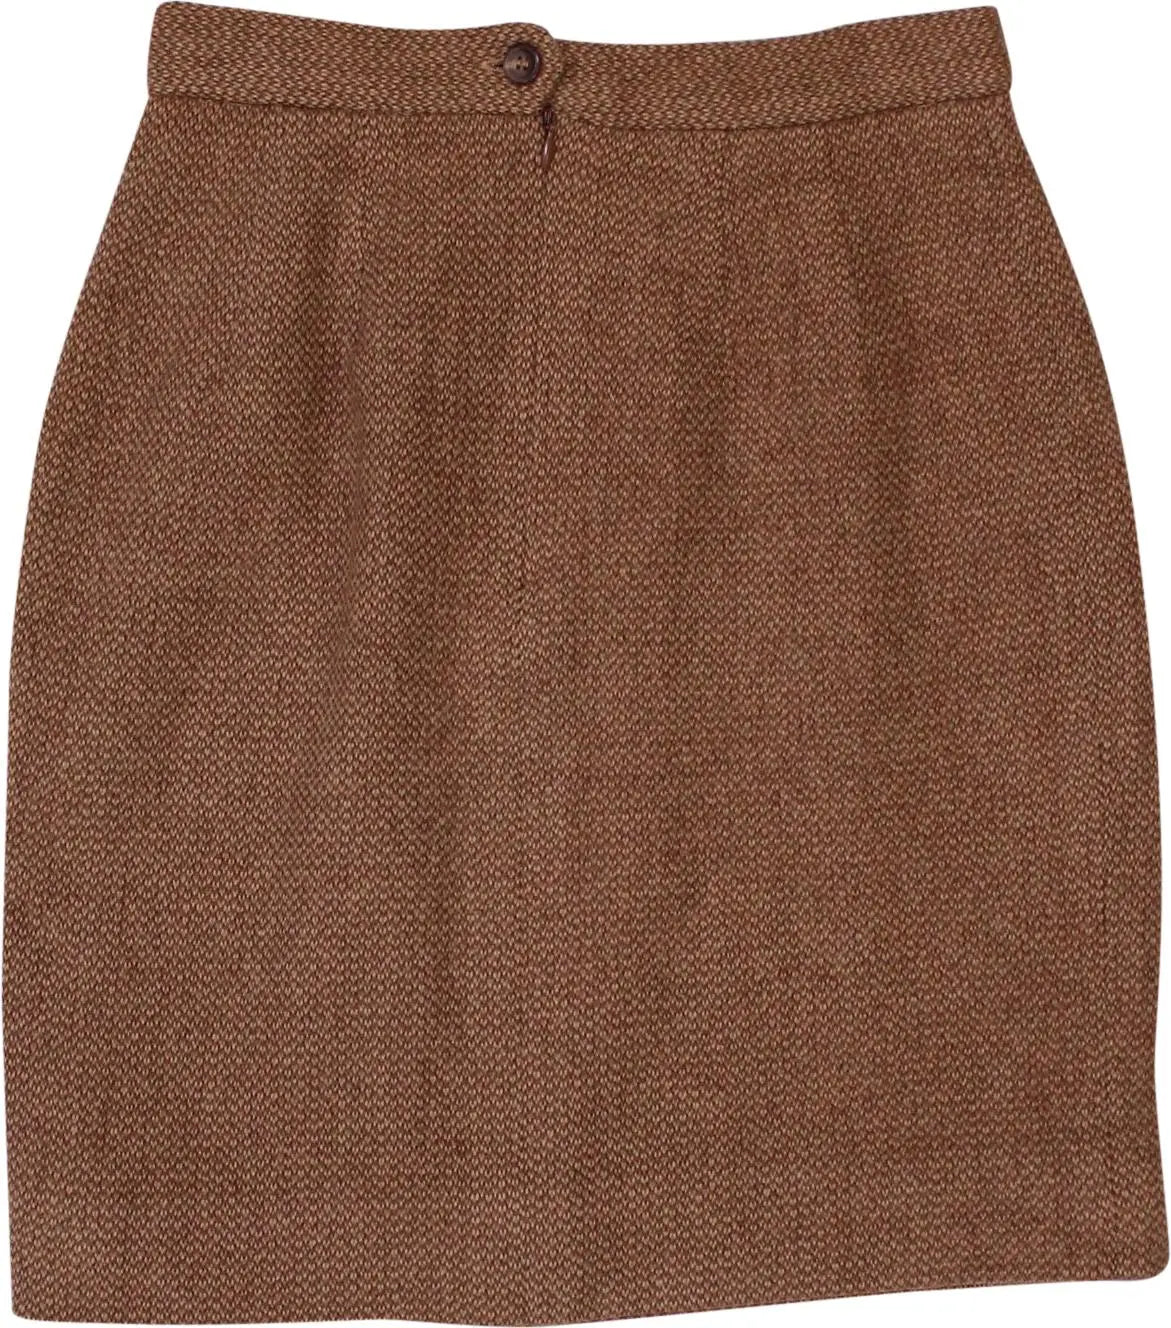 Ralph Lauren - Wool Skirt by Ralph Lauren- ThriftTale.com - Vintage and second handclothing